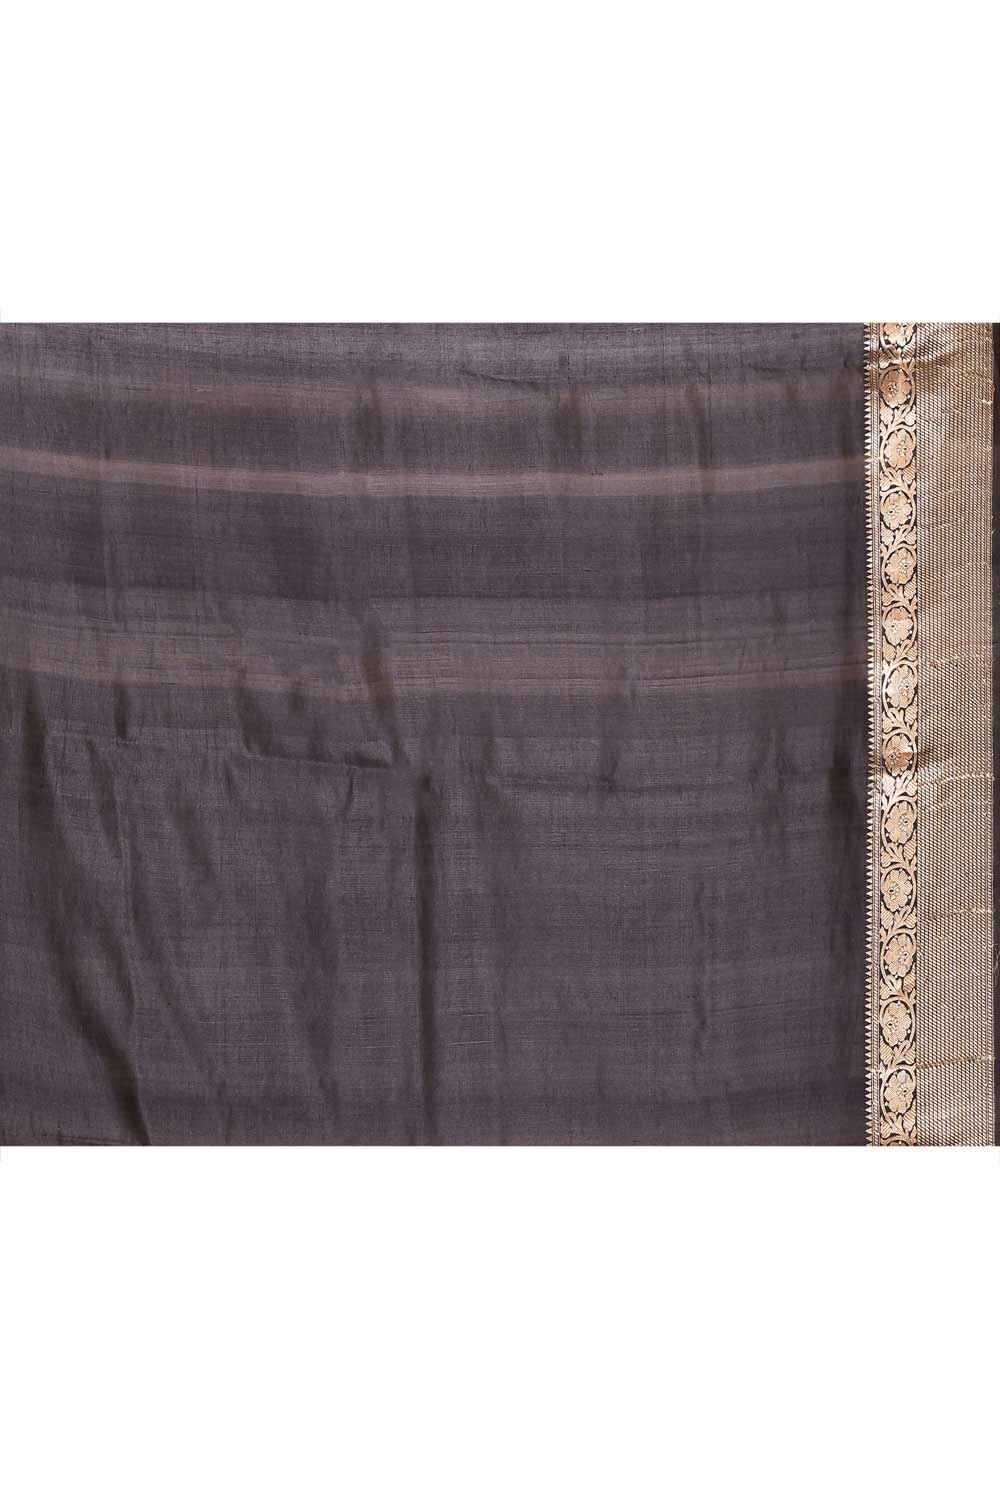 Black Pure Katan Silk Silk Banarasi Handloom Saree With Ropa-sona Stripe Pattern Design